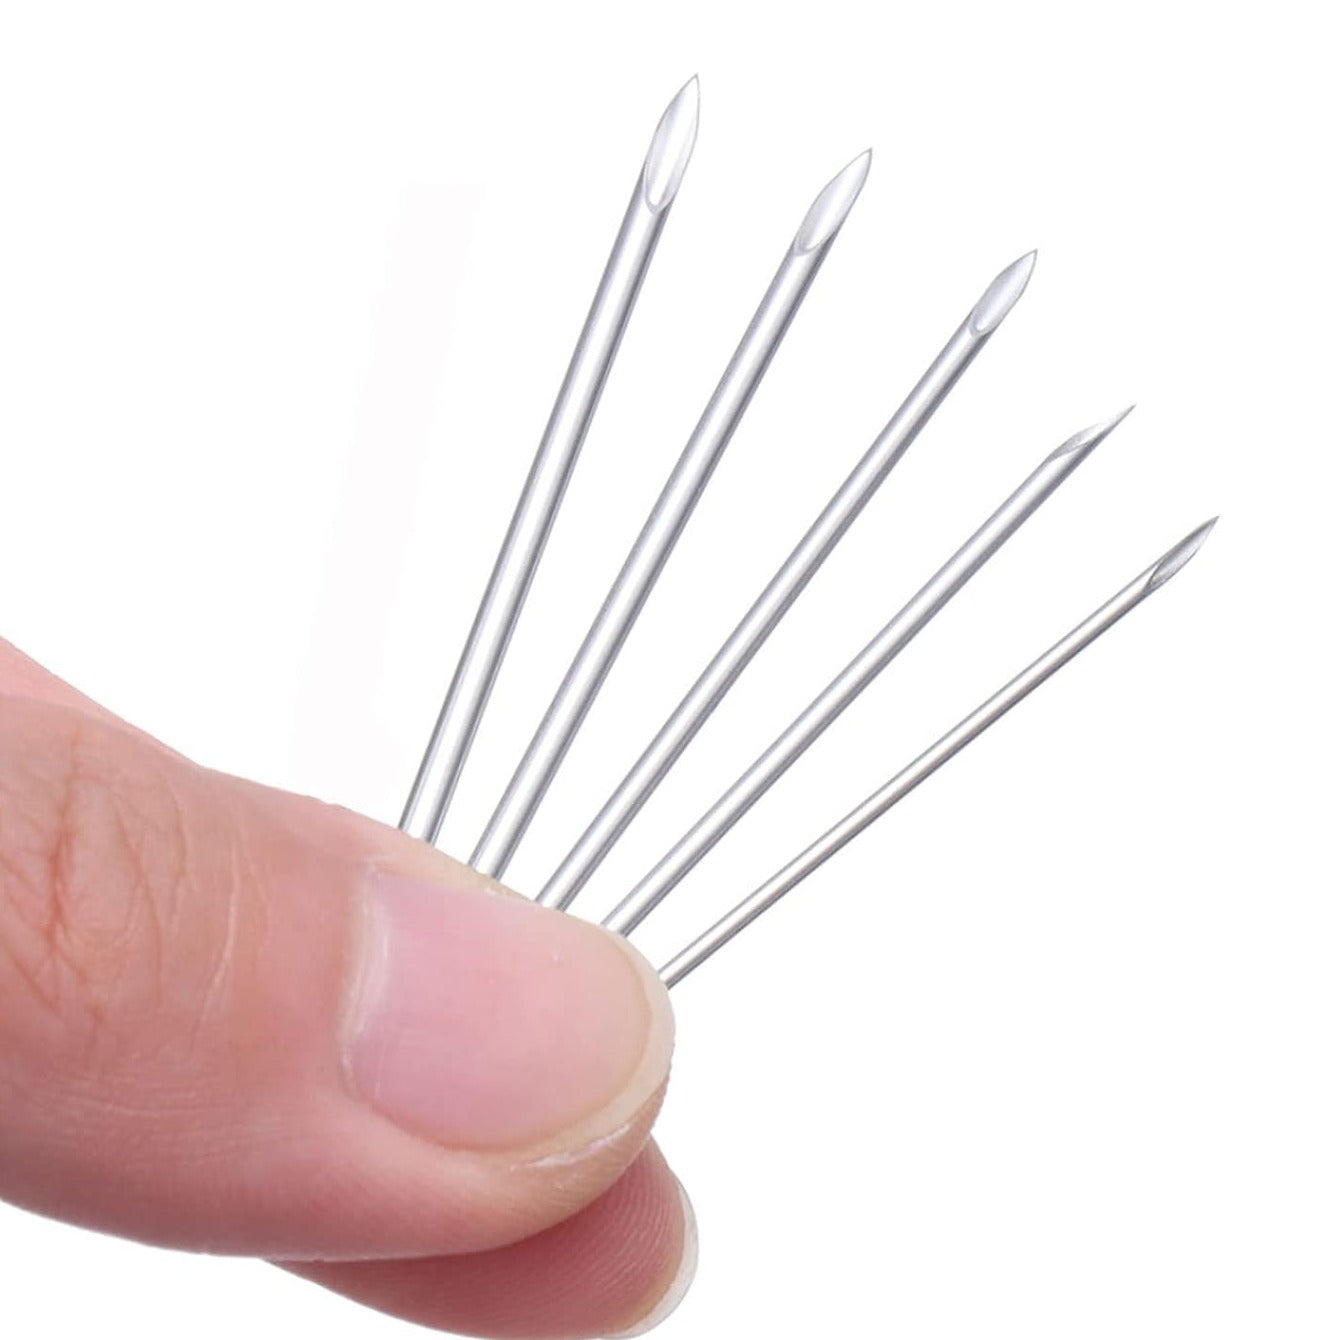 2 13 Gauge Piercing Needles